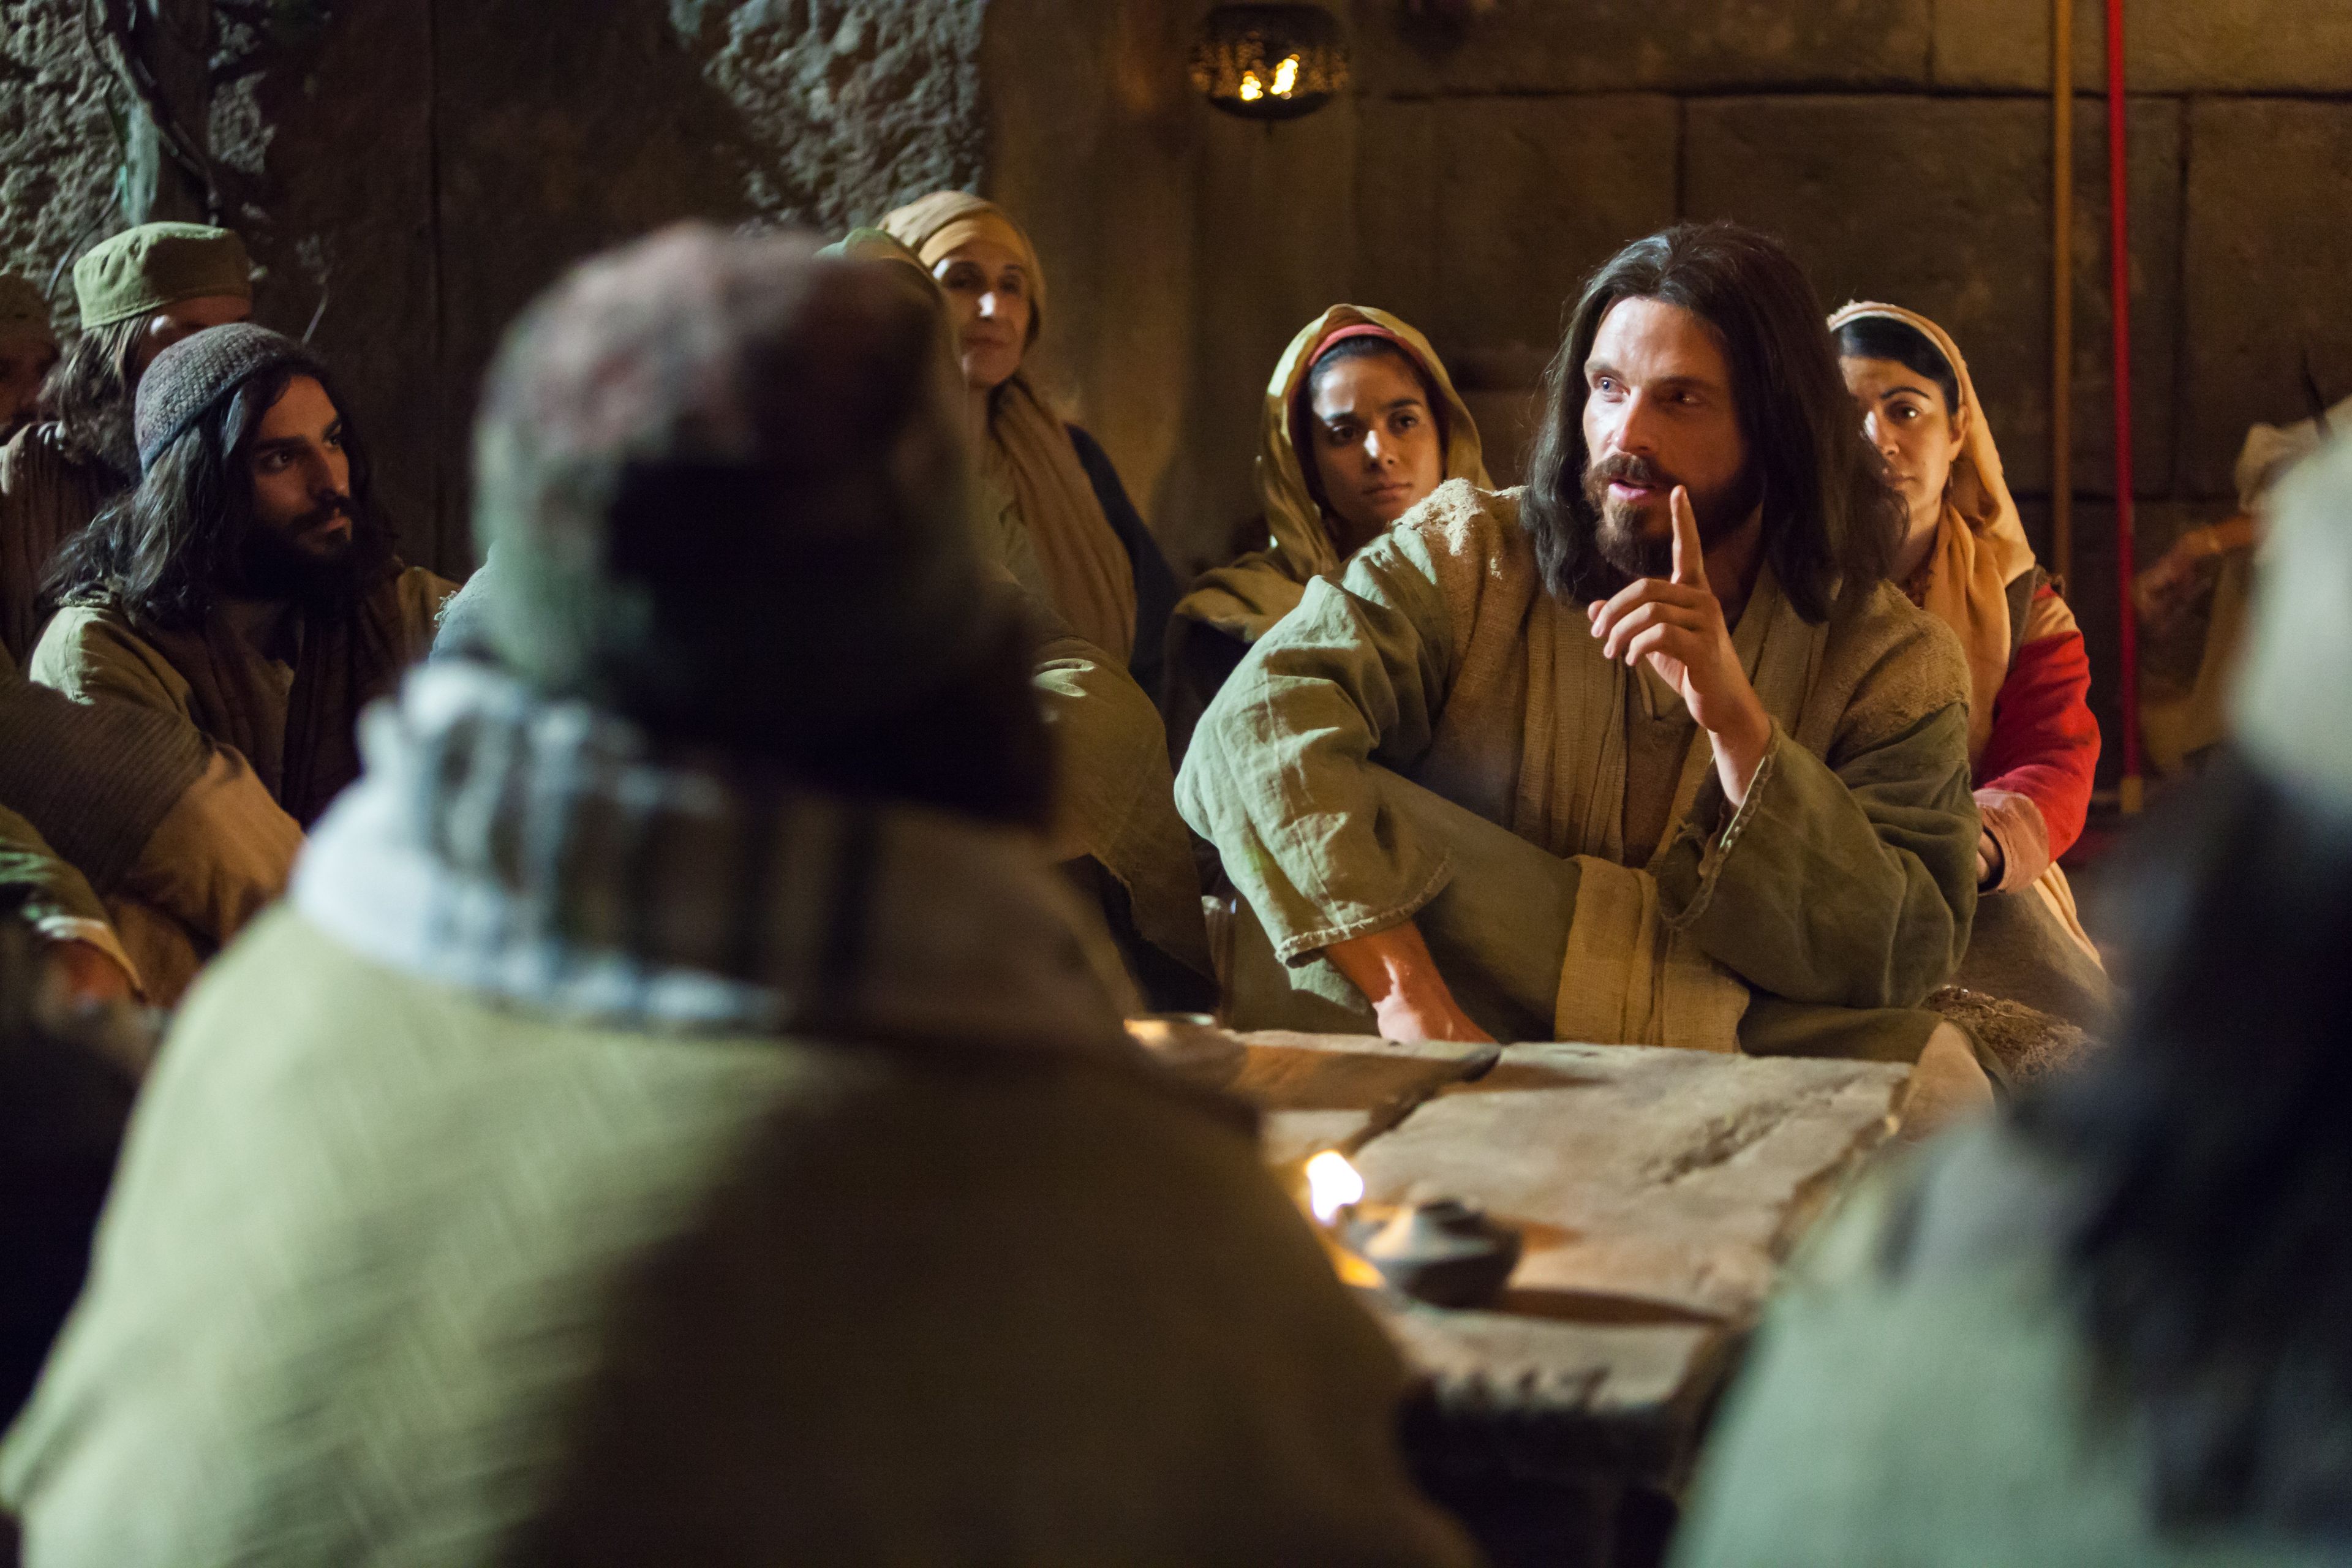 Christ teaching His followers of the kingdom of heaven.